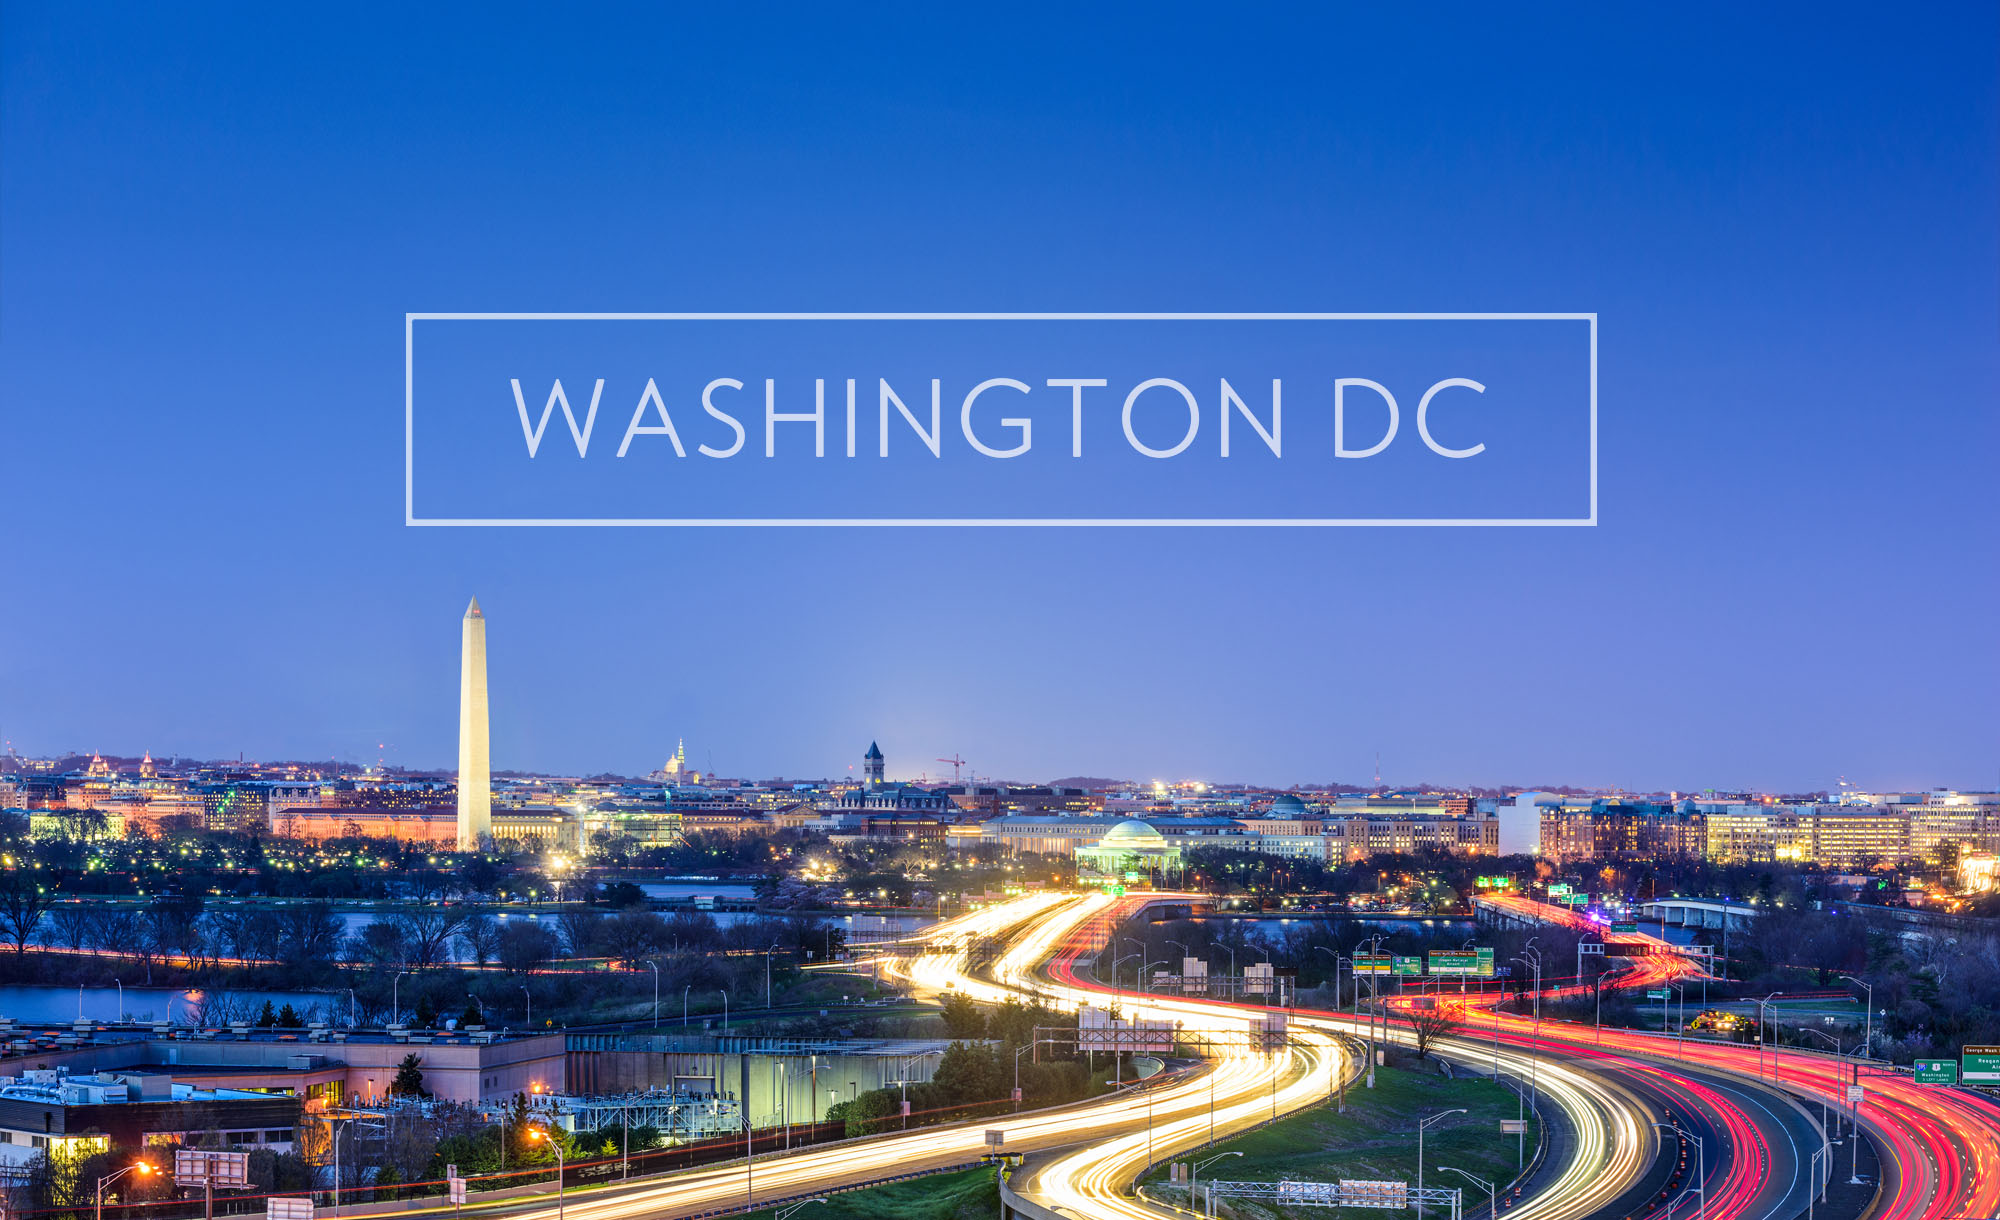 Travel guide to Washington DC